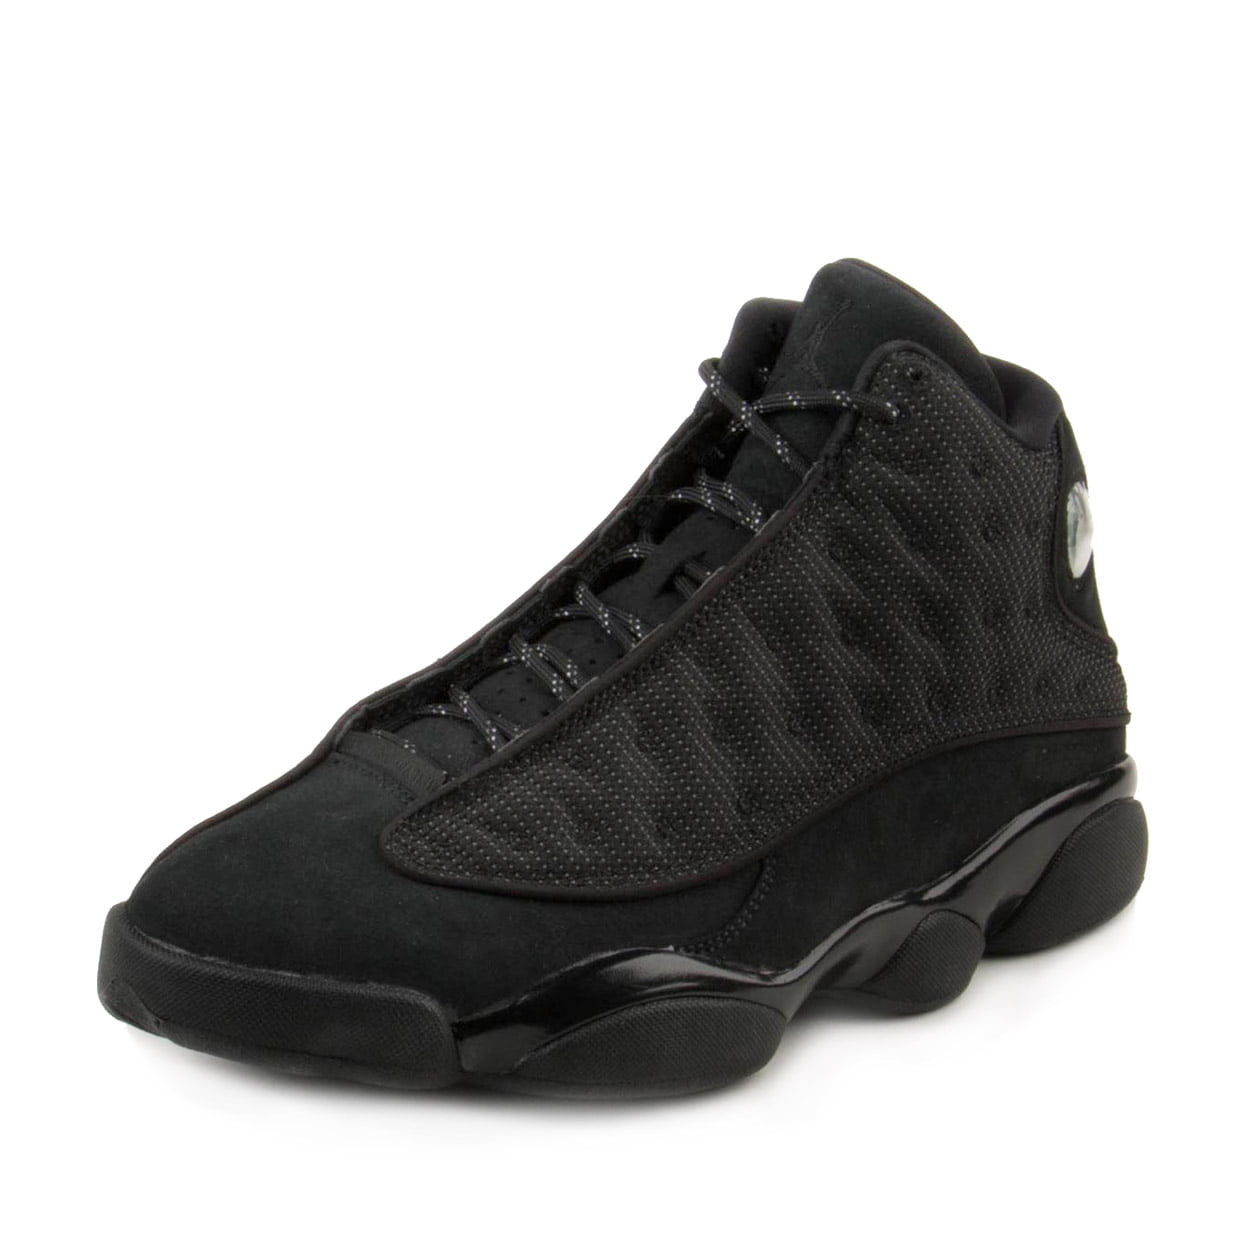 Postman Facilitate flood Nike Mens Air Jordan 13 Retro "Black Cat" Black/Anthracite 414571-011 -  Walmart.com